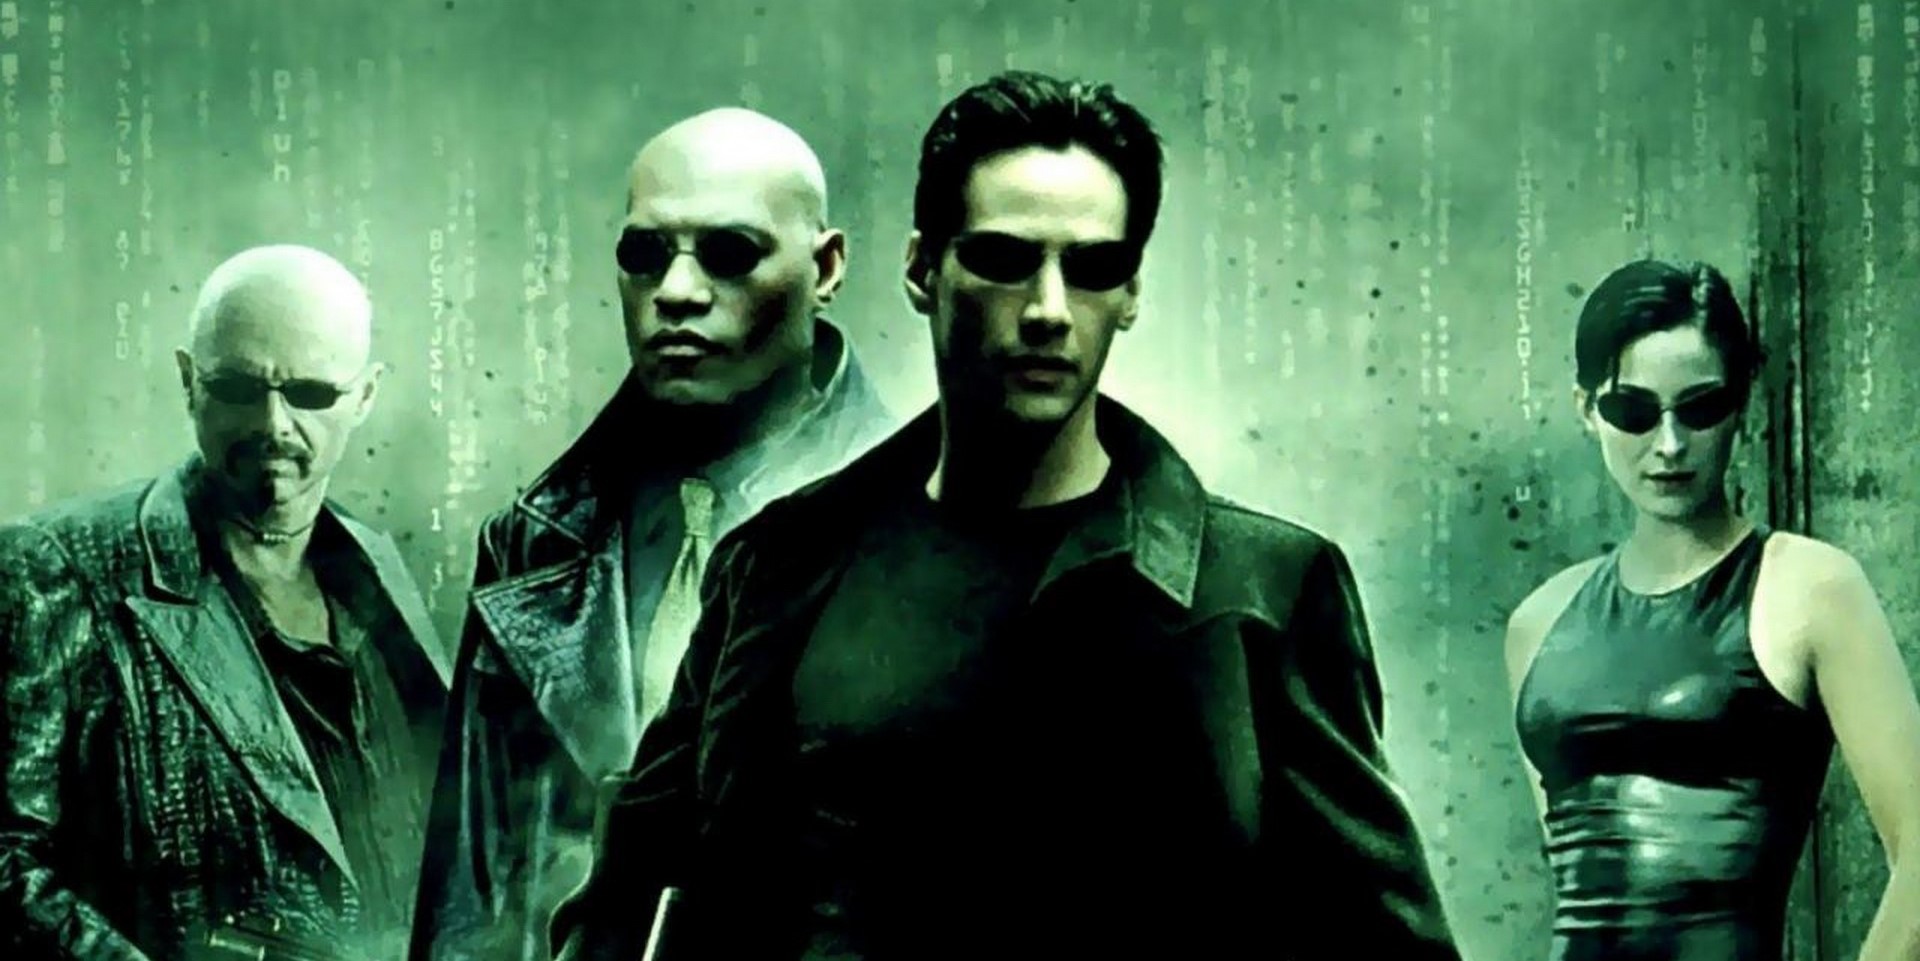 the-matrix-1999